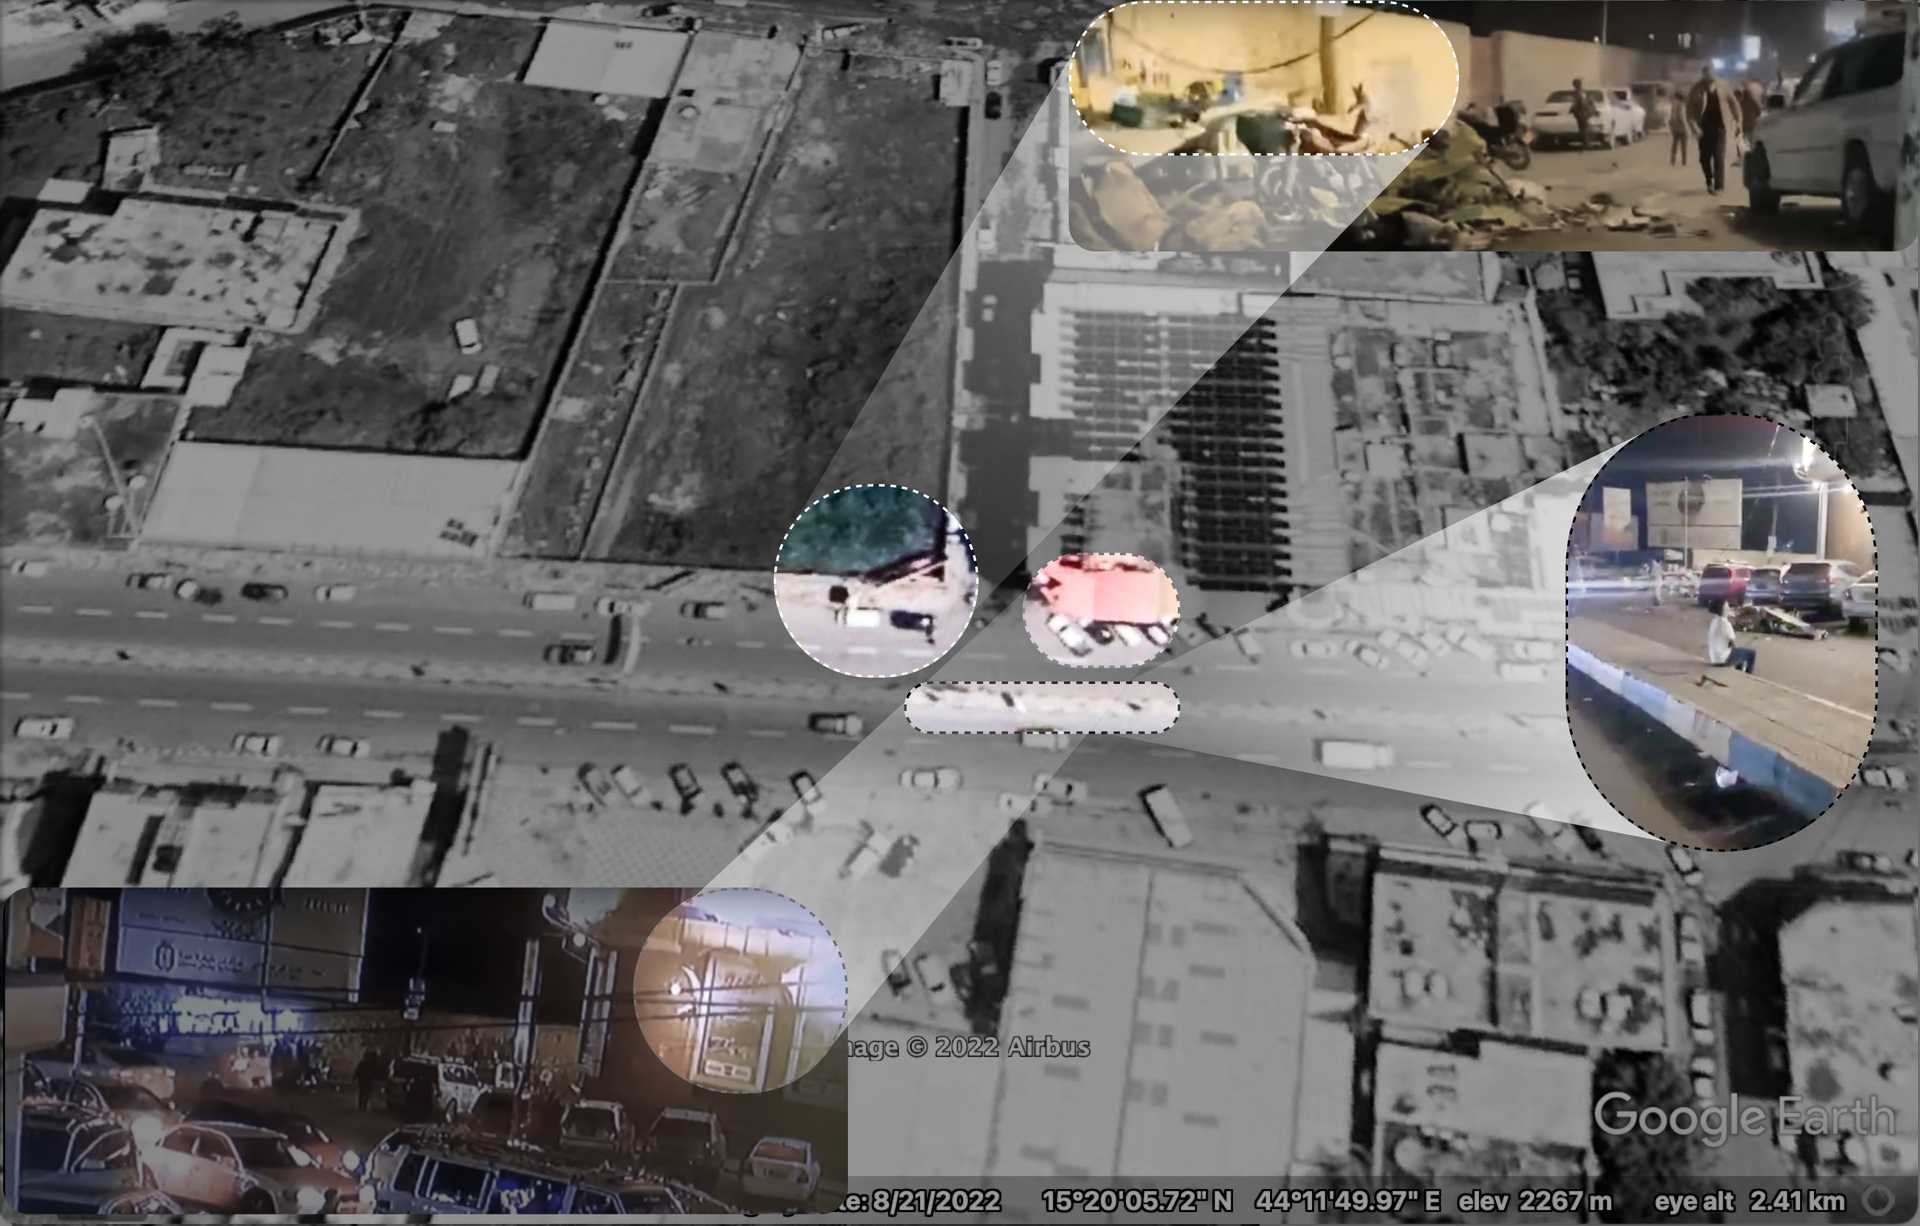 A drone fell on a crowded civilian street in Sanaa